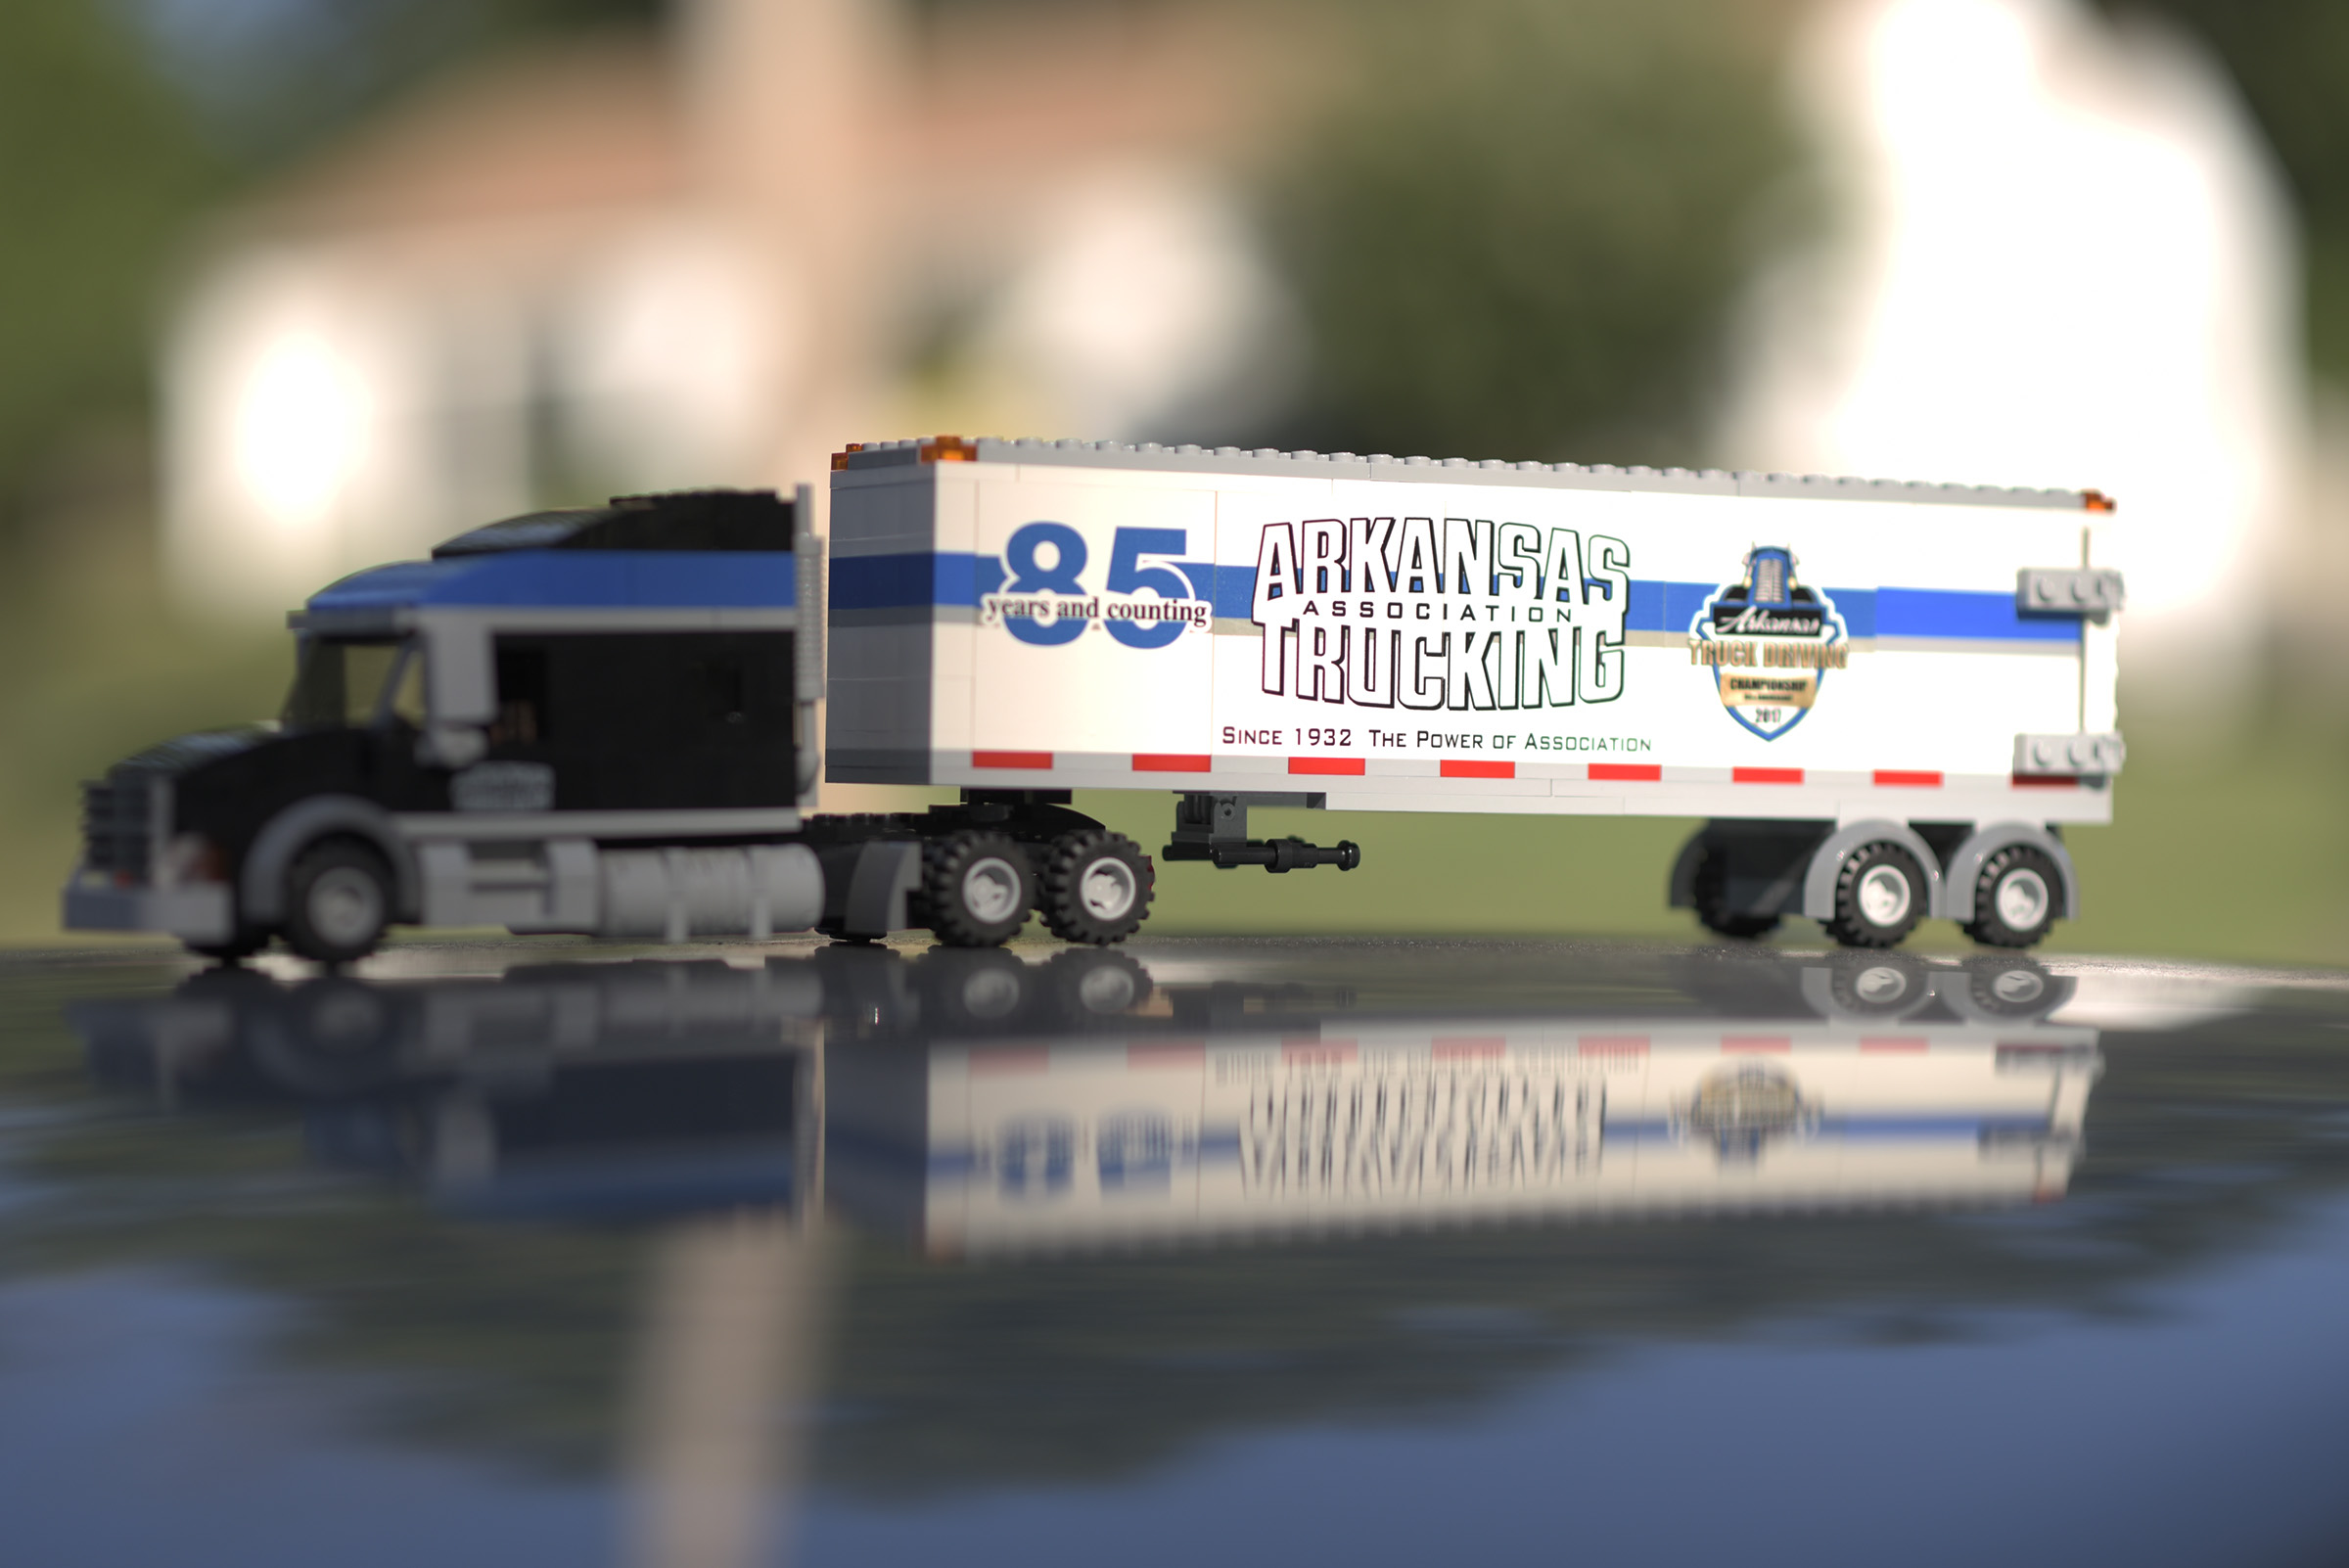 Arkansas Trucking commemorative lego set